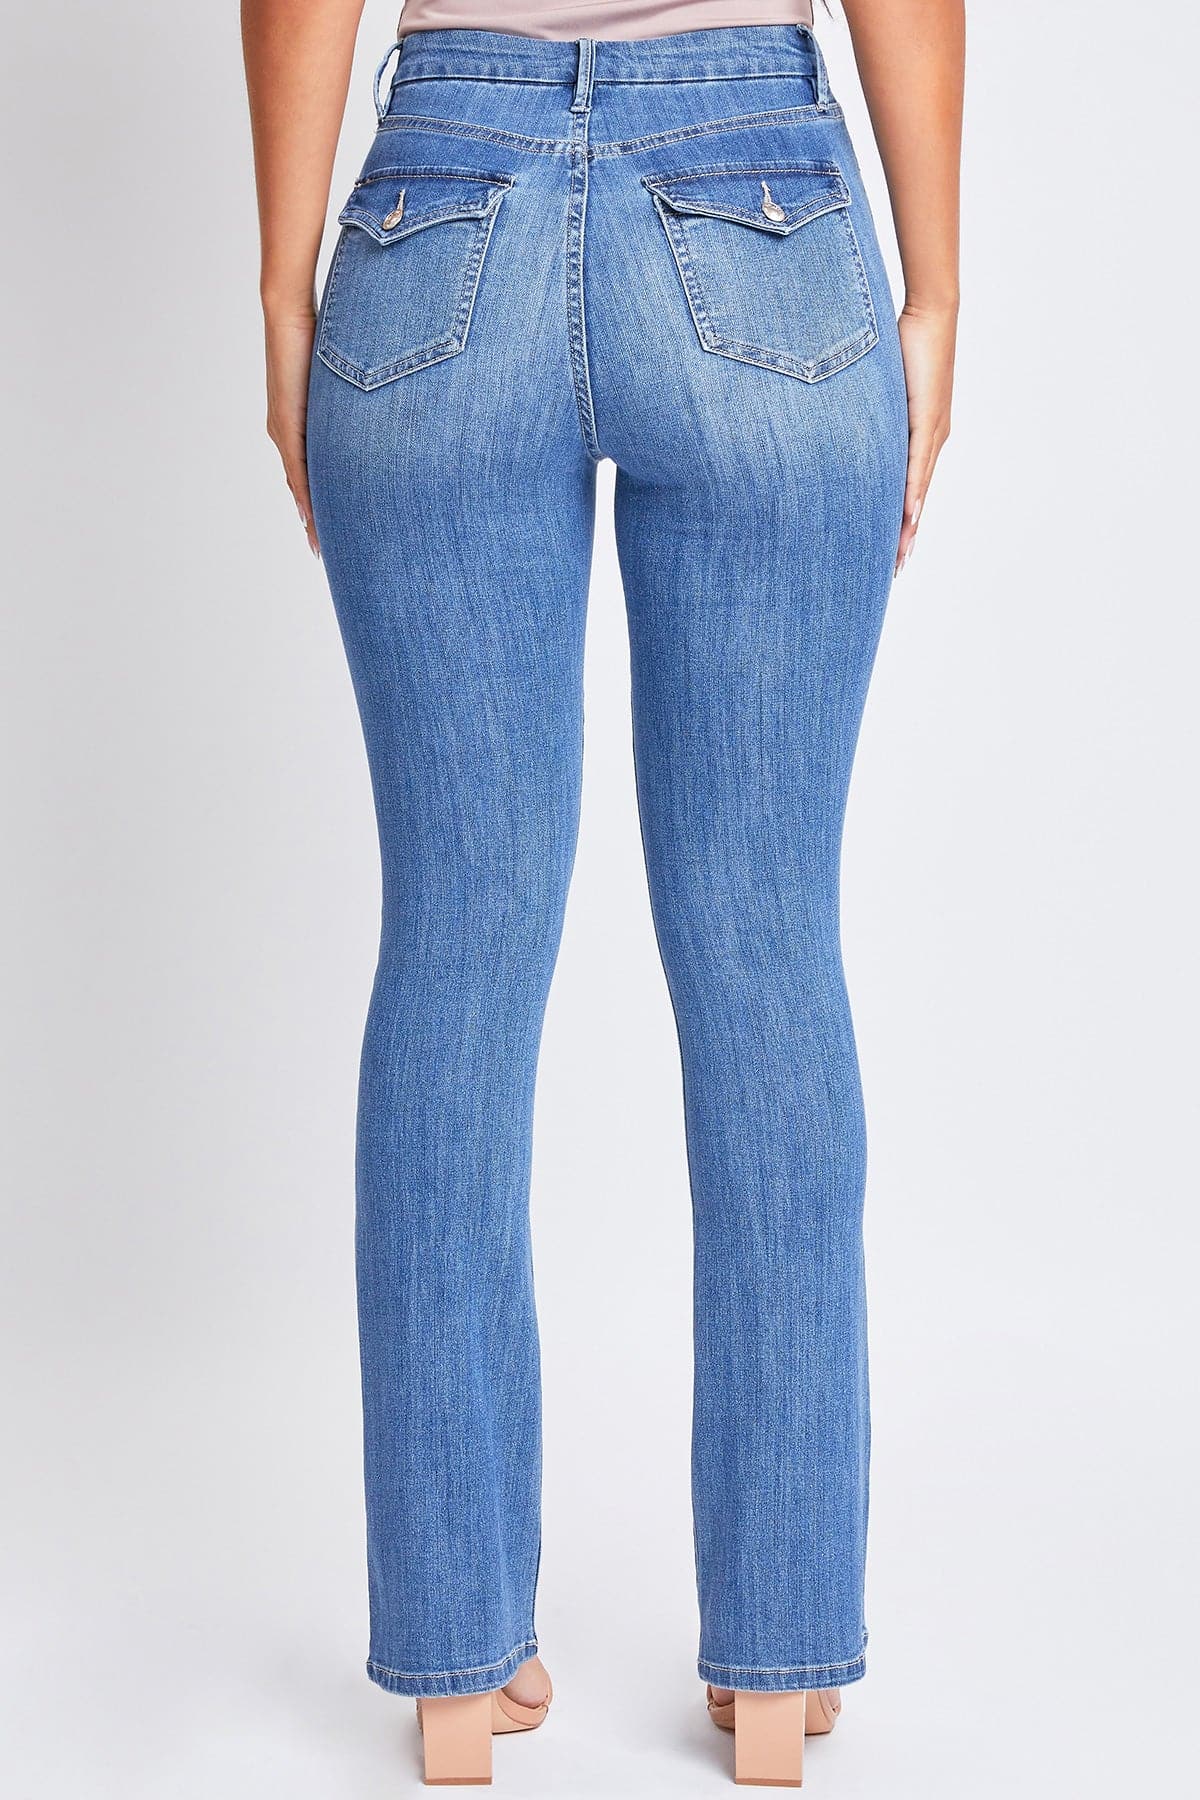 Bali Embellished Bootcut Denim Jeans With Stretch YMI Jeans [P352936-B083 YMI  Jeans Denim] - $49.00